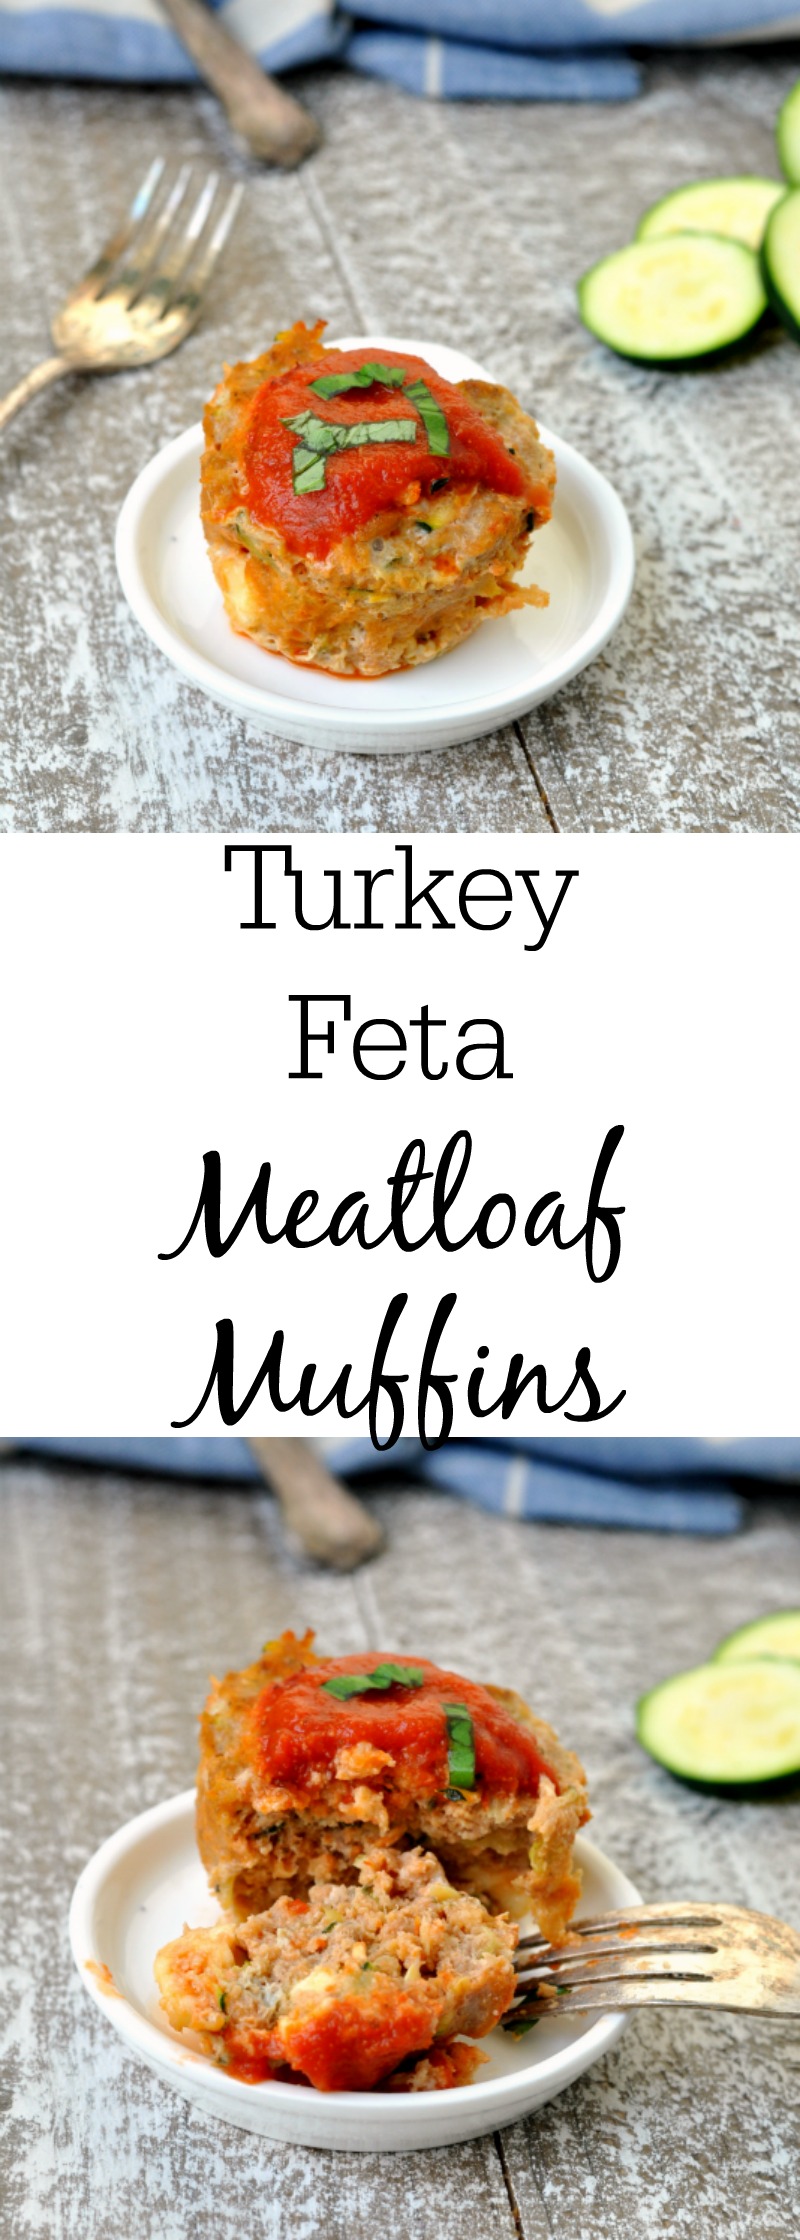 Turkey Feta Meatloaf Muffins Photo Collage